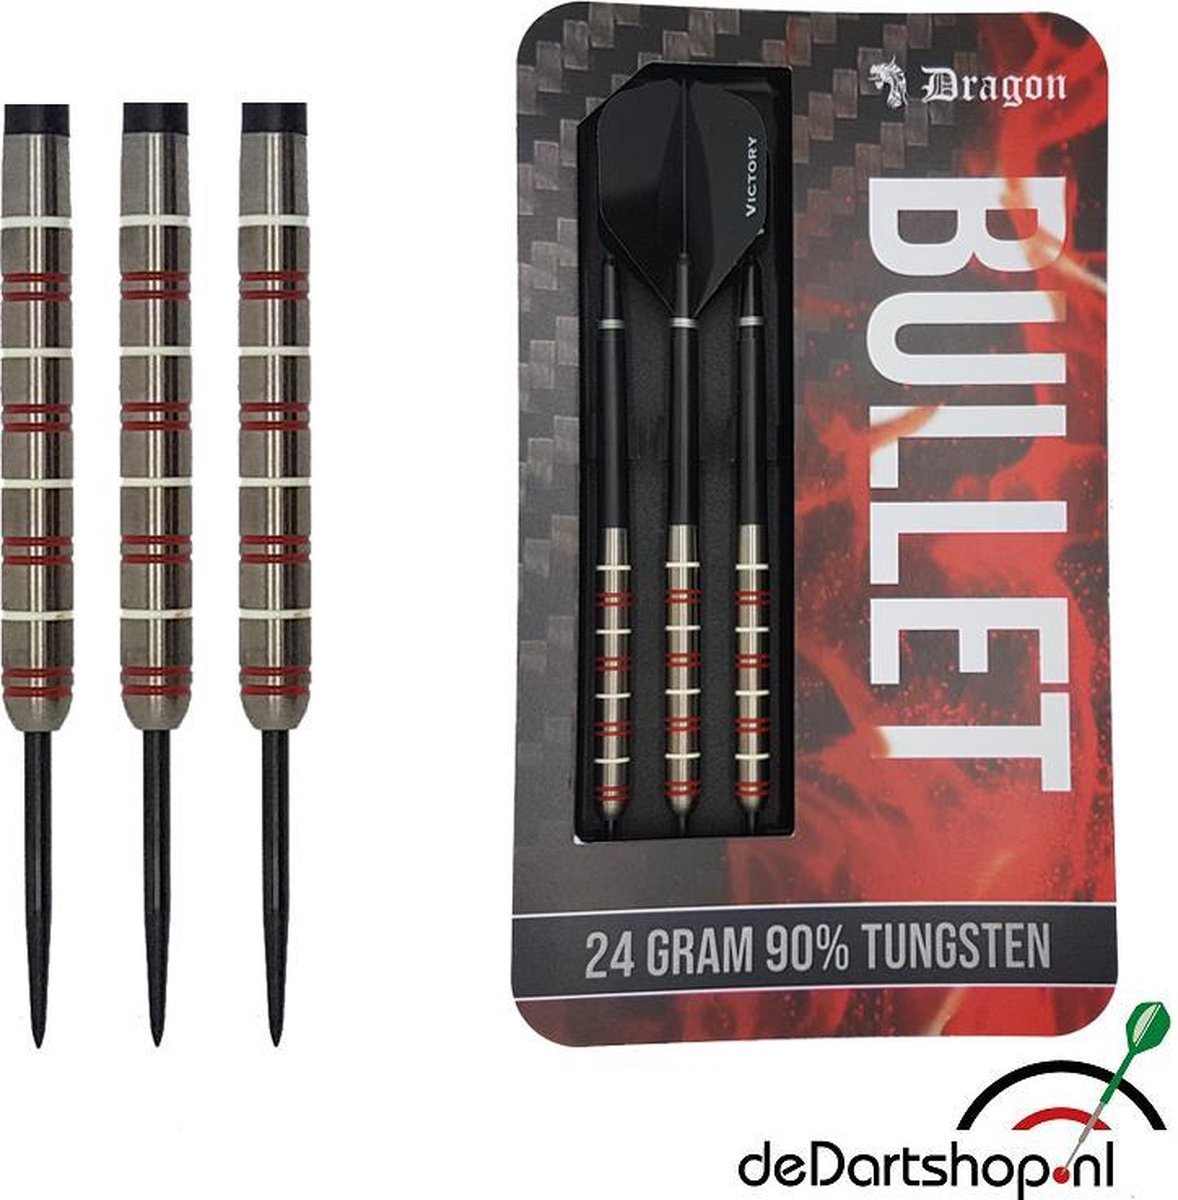 Dragon darts - Bullet - 90% tungsten - 26 gram - dartpijlen